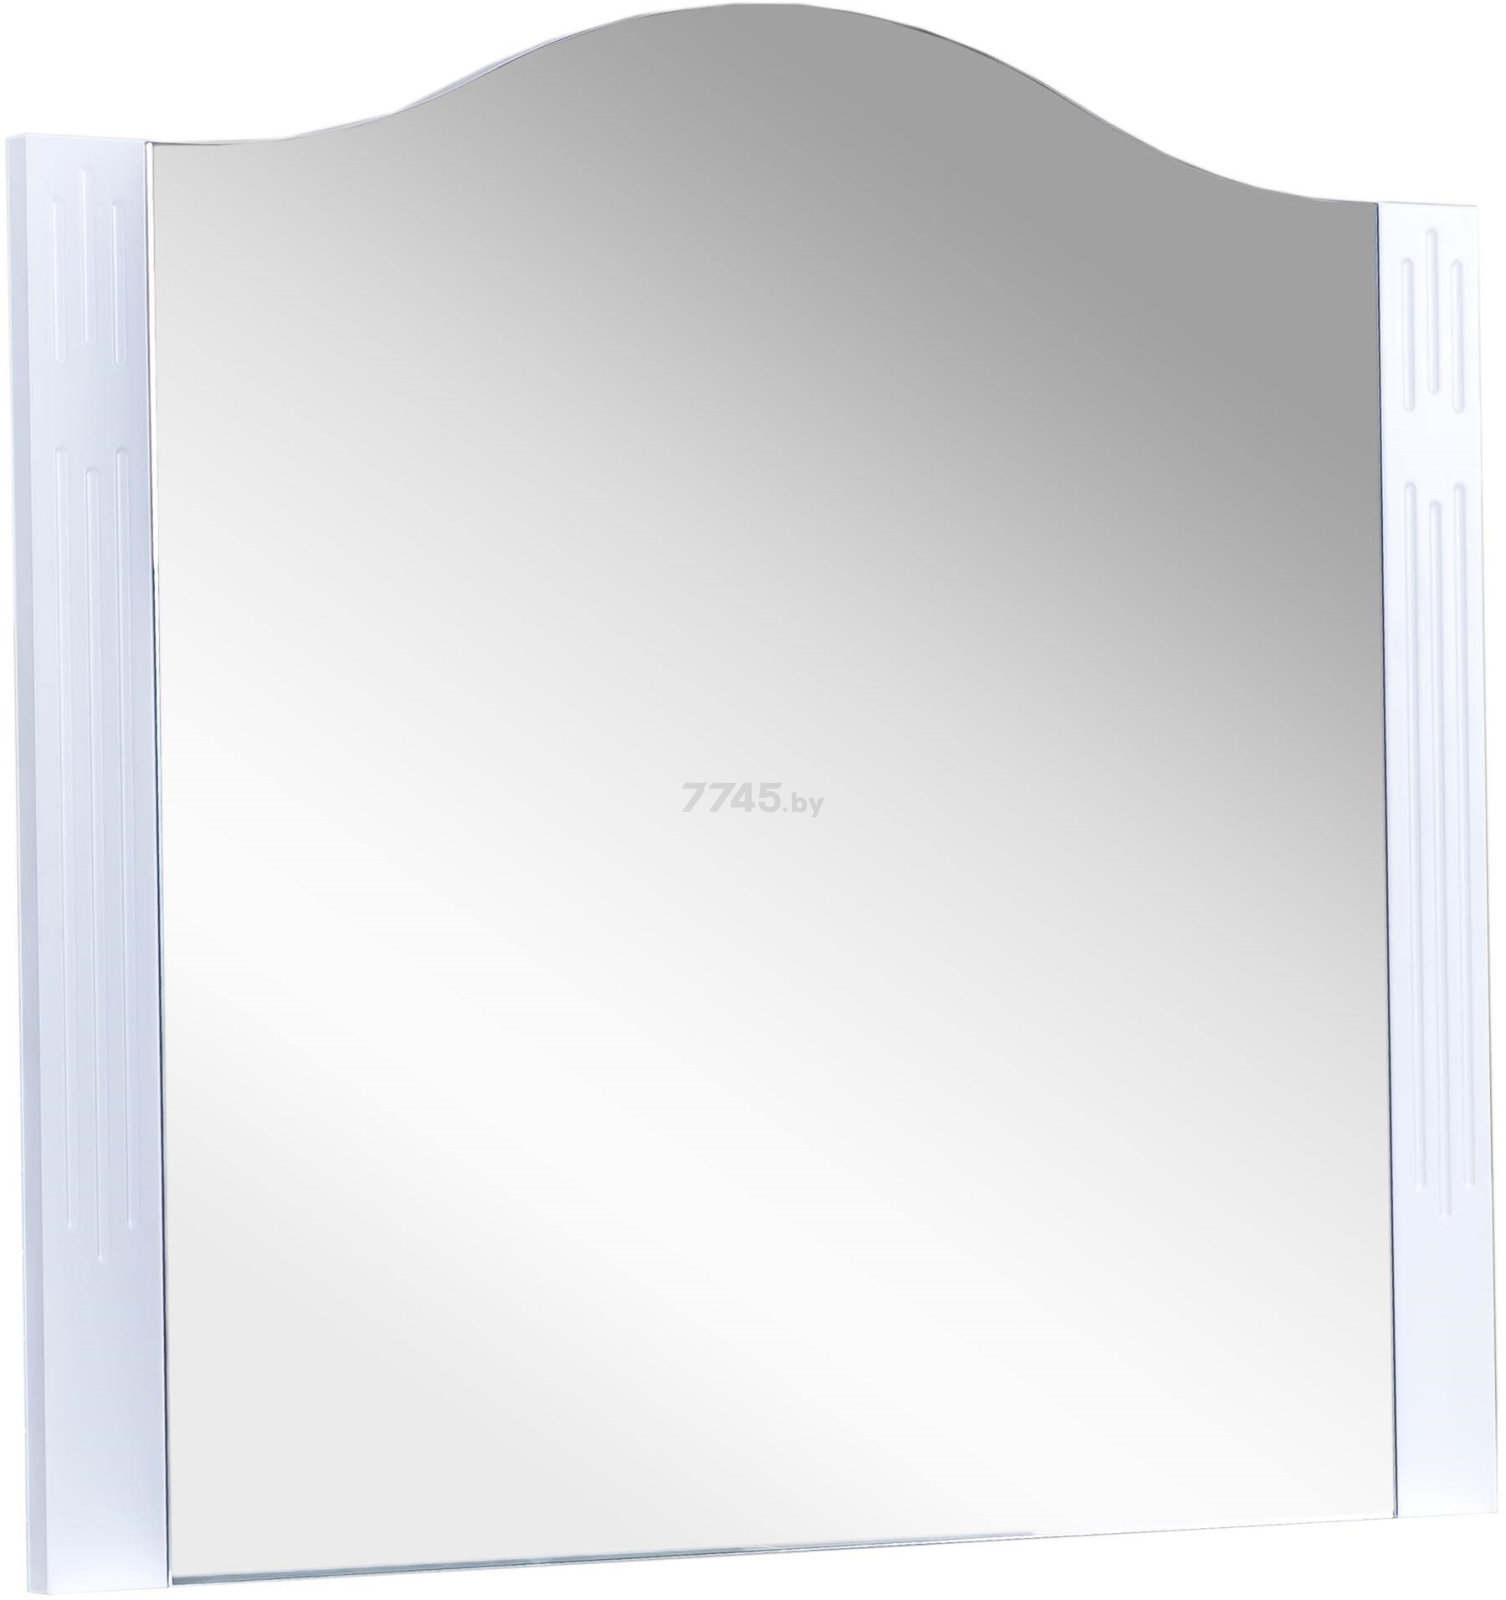 Зеркало для ванной с подсветкой АКВА РОДОС Классик New 80 (АР0002693)